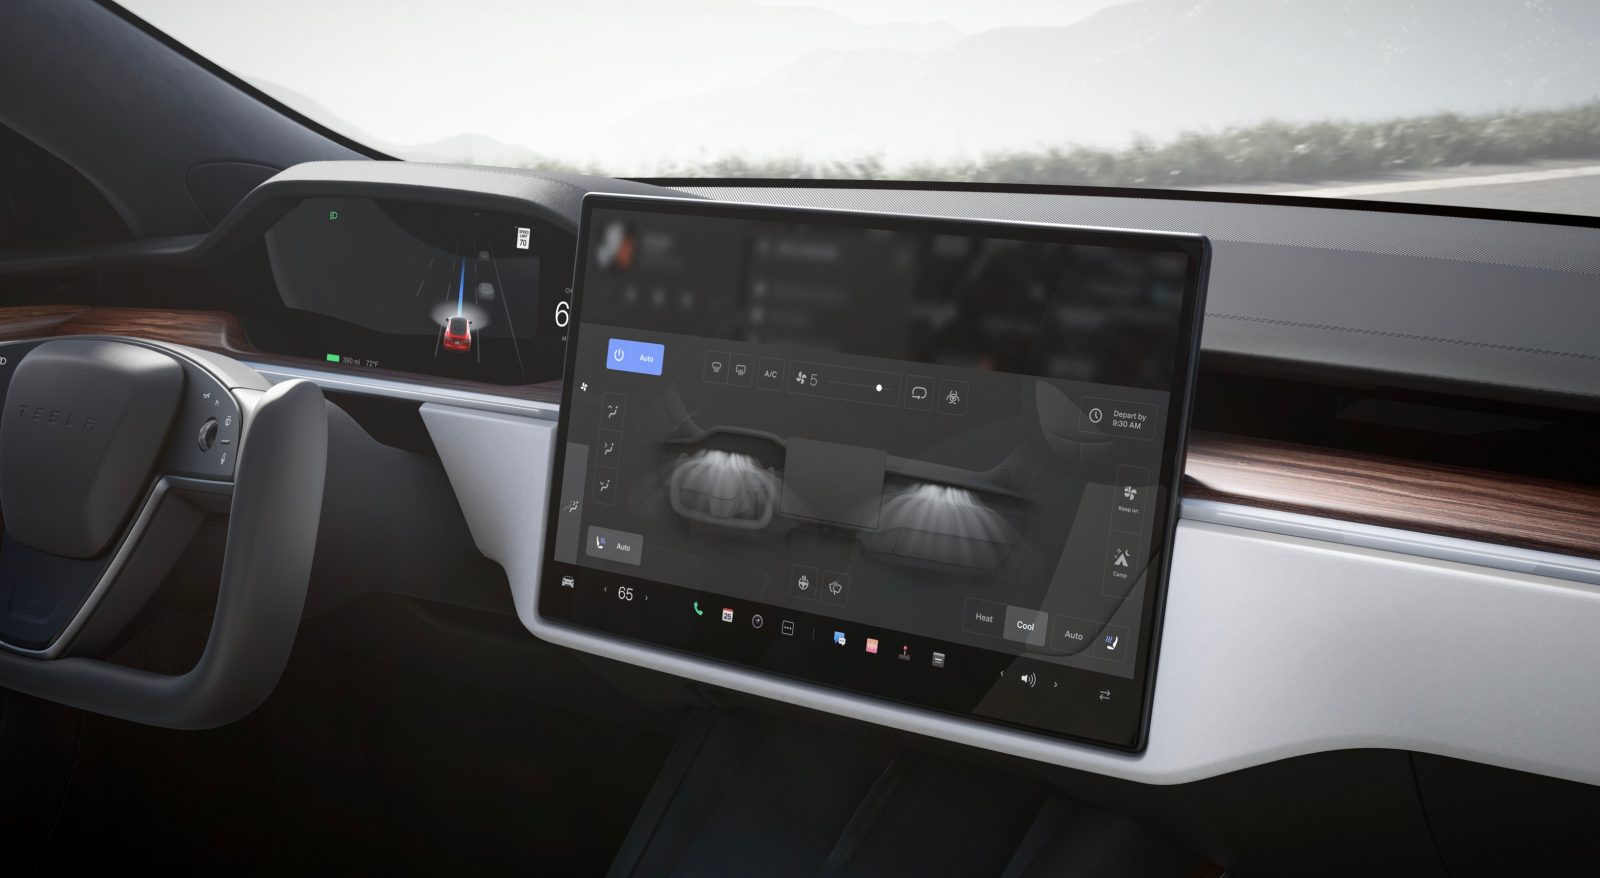 Tesla Model S interior